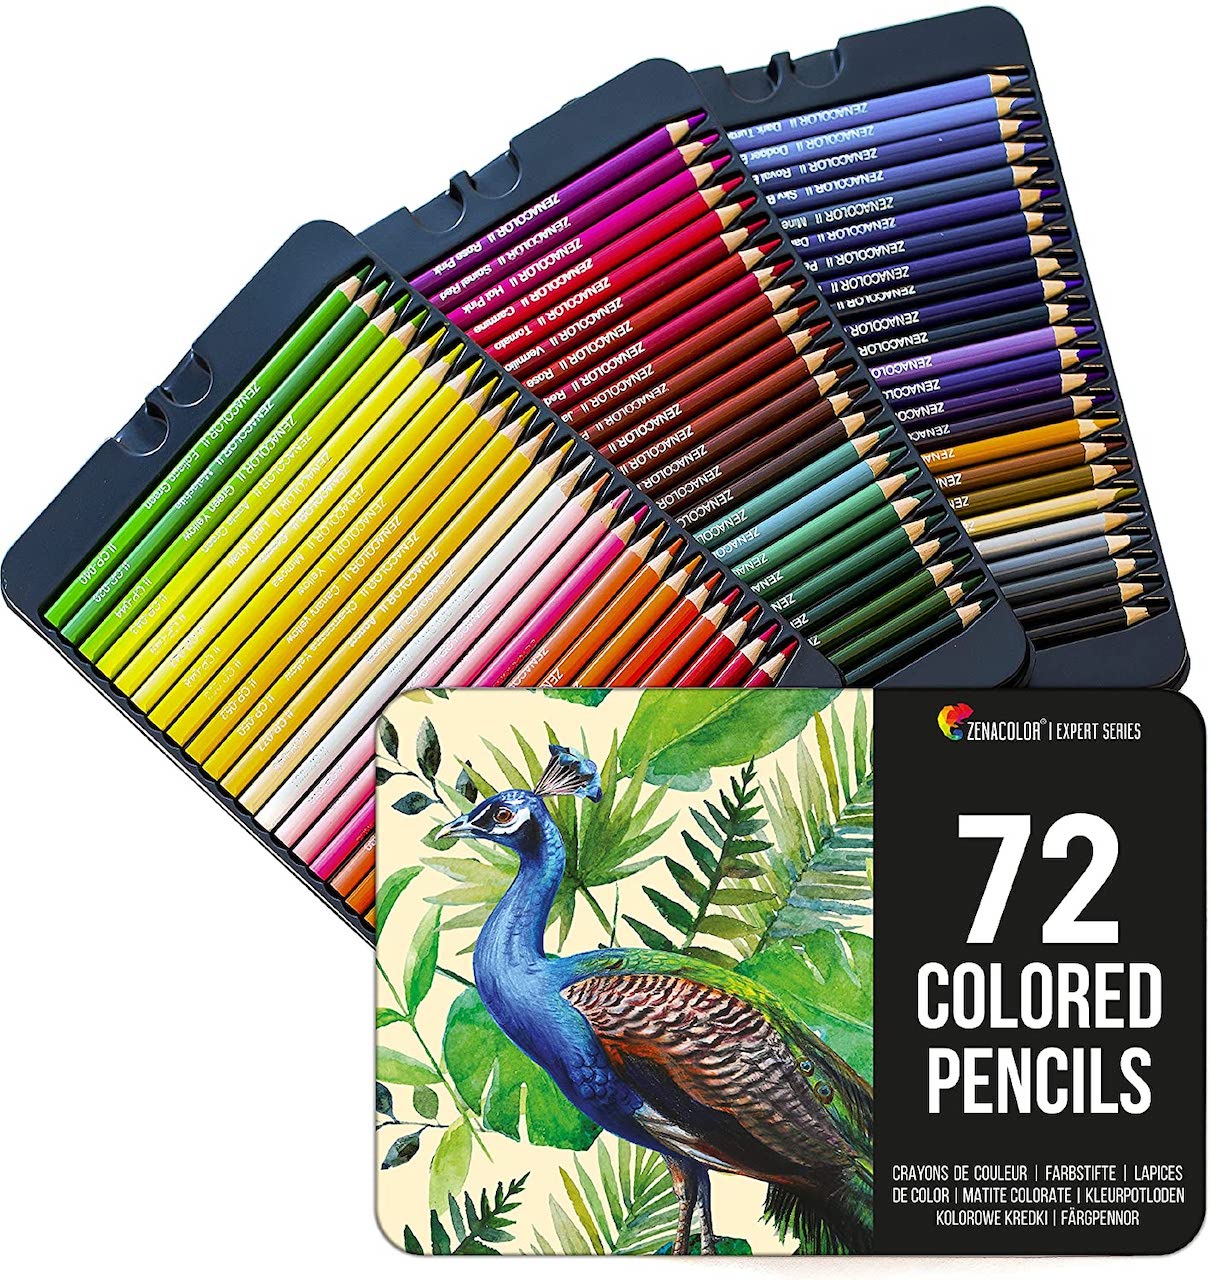 72 Art Crayon De Couleur Dessin Crayon 72 Couleur Dessin Crayon